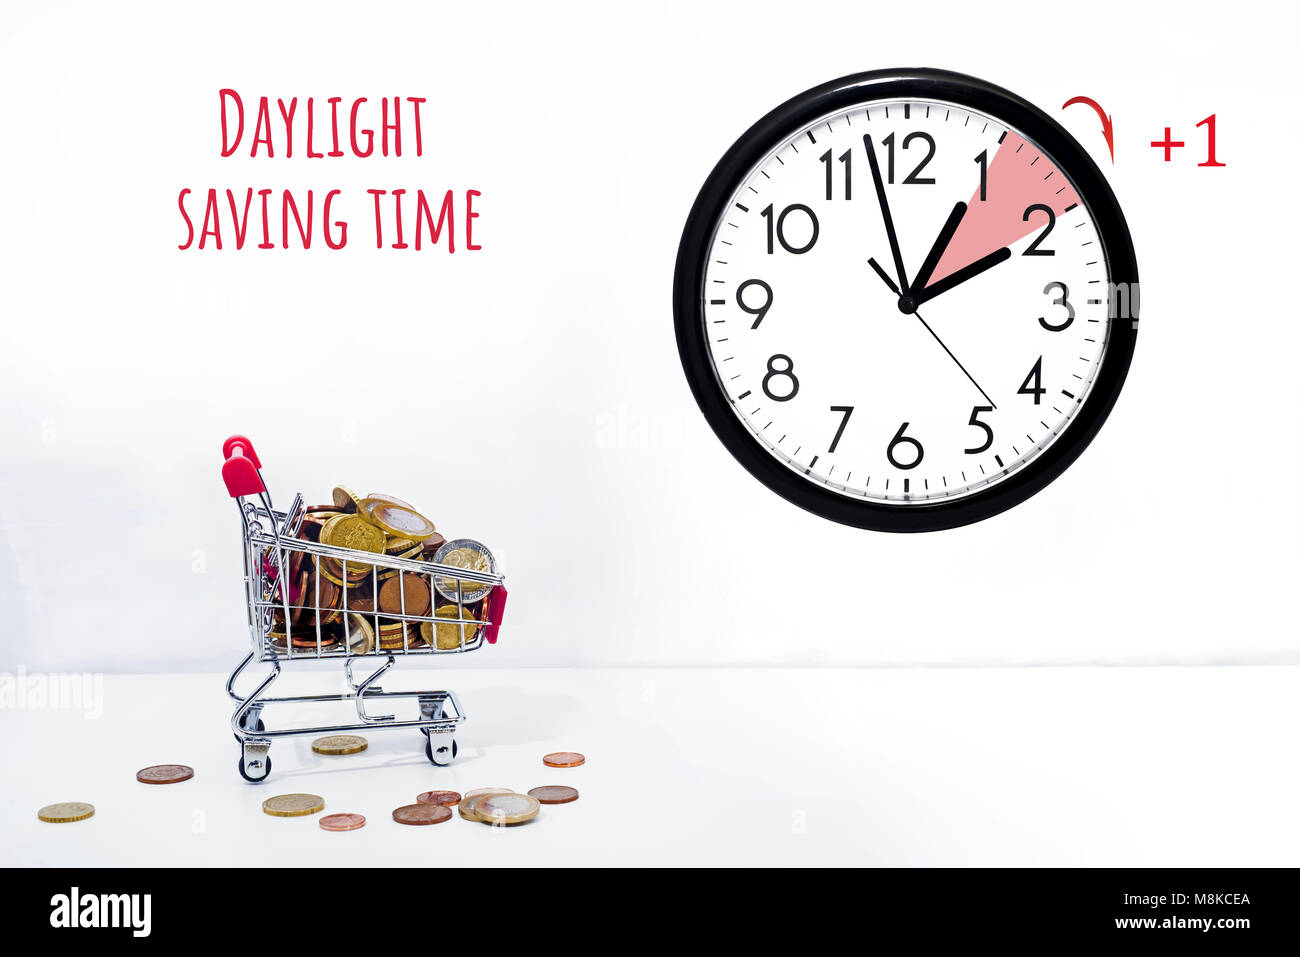 Daylight saving time. Turn времена. Летнее время и зимнее время. Time is saved. Time will turning time